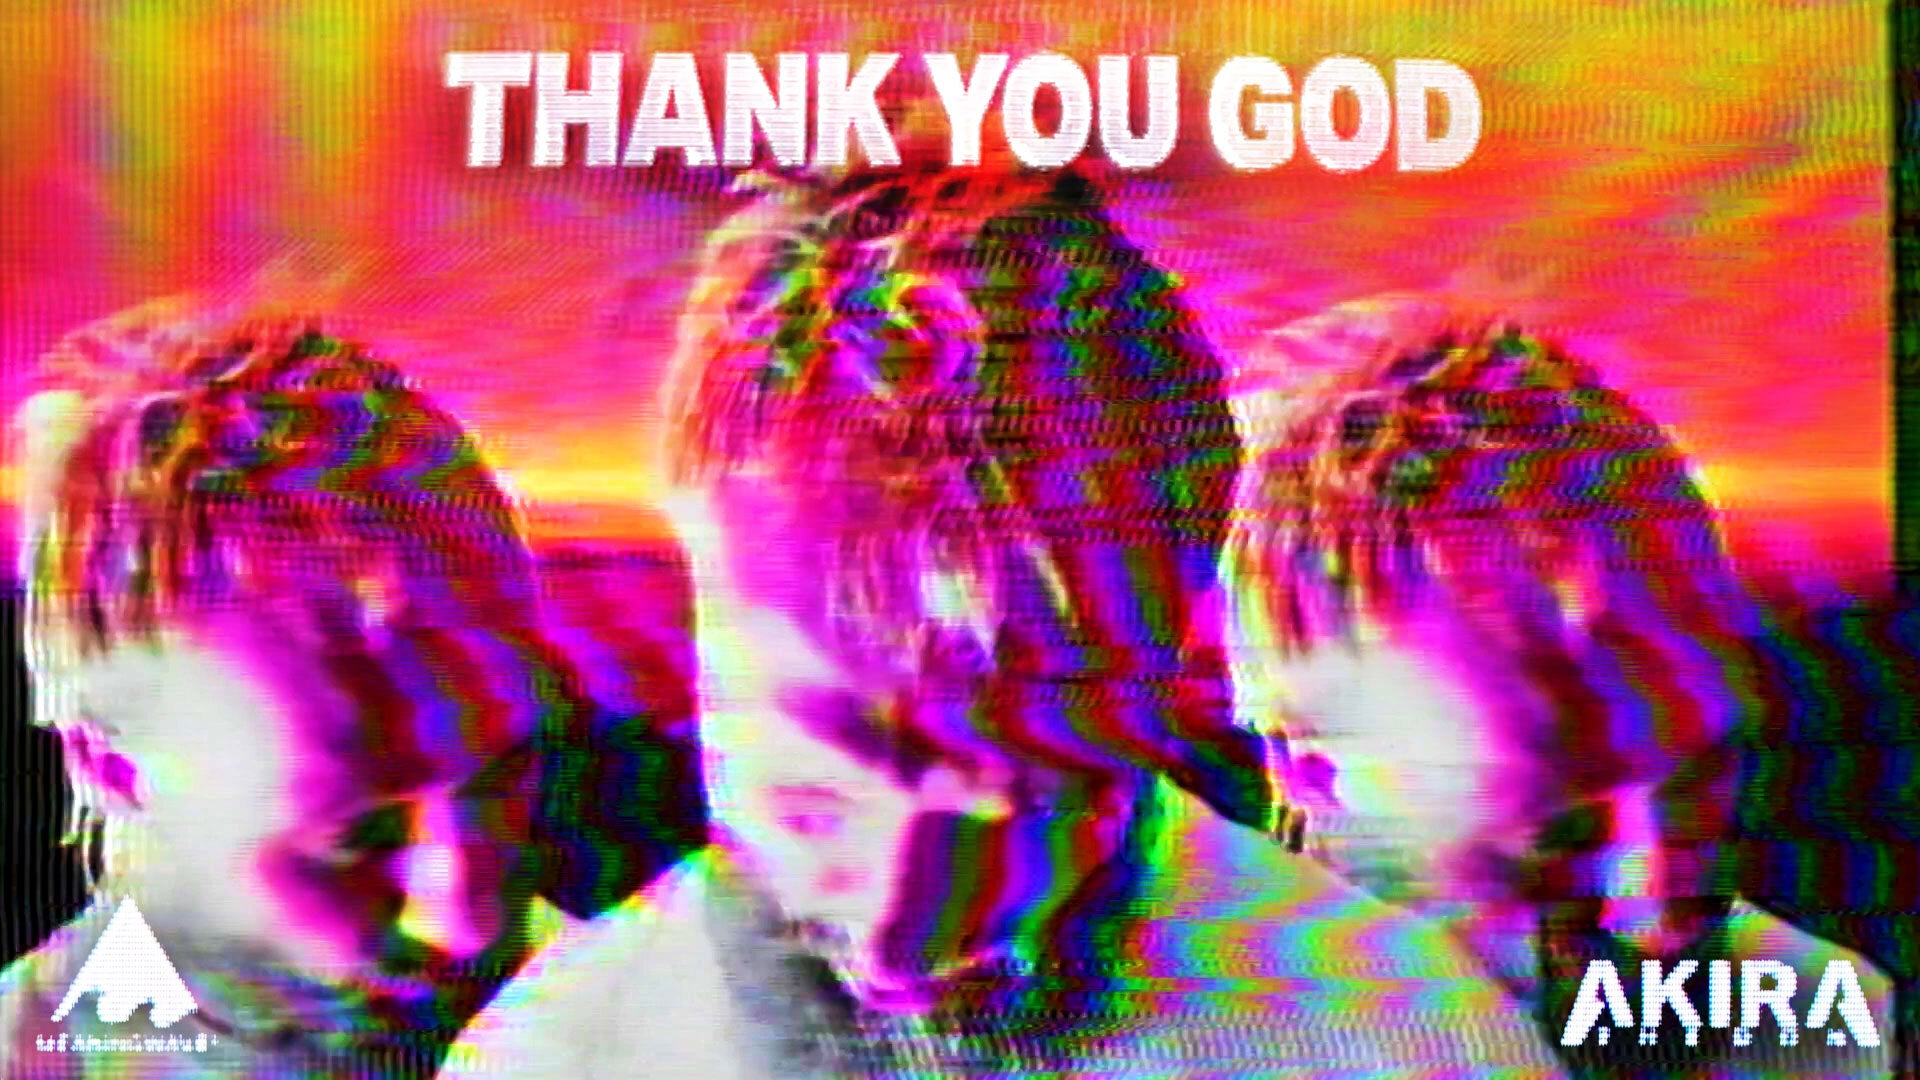 Akira The Don & Paul Harvey - THANK YOU GOD | Music Video